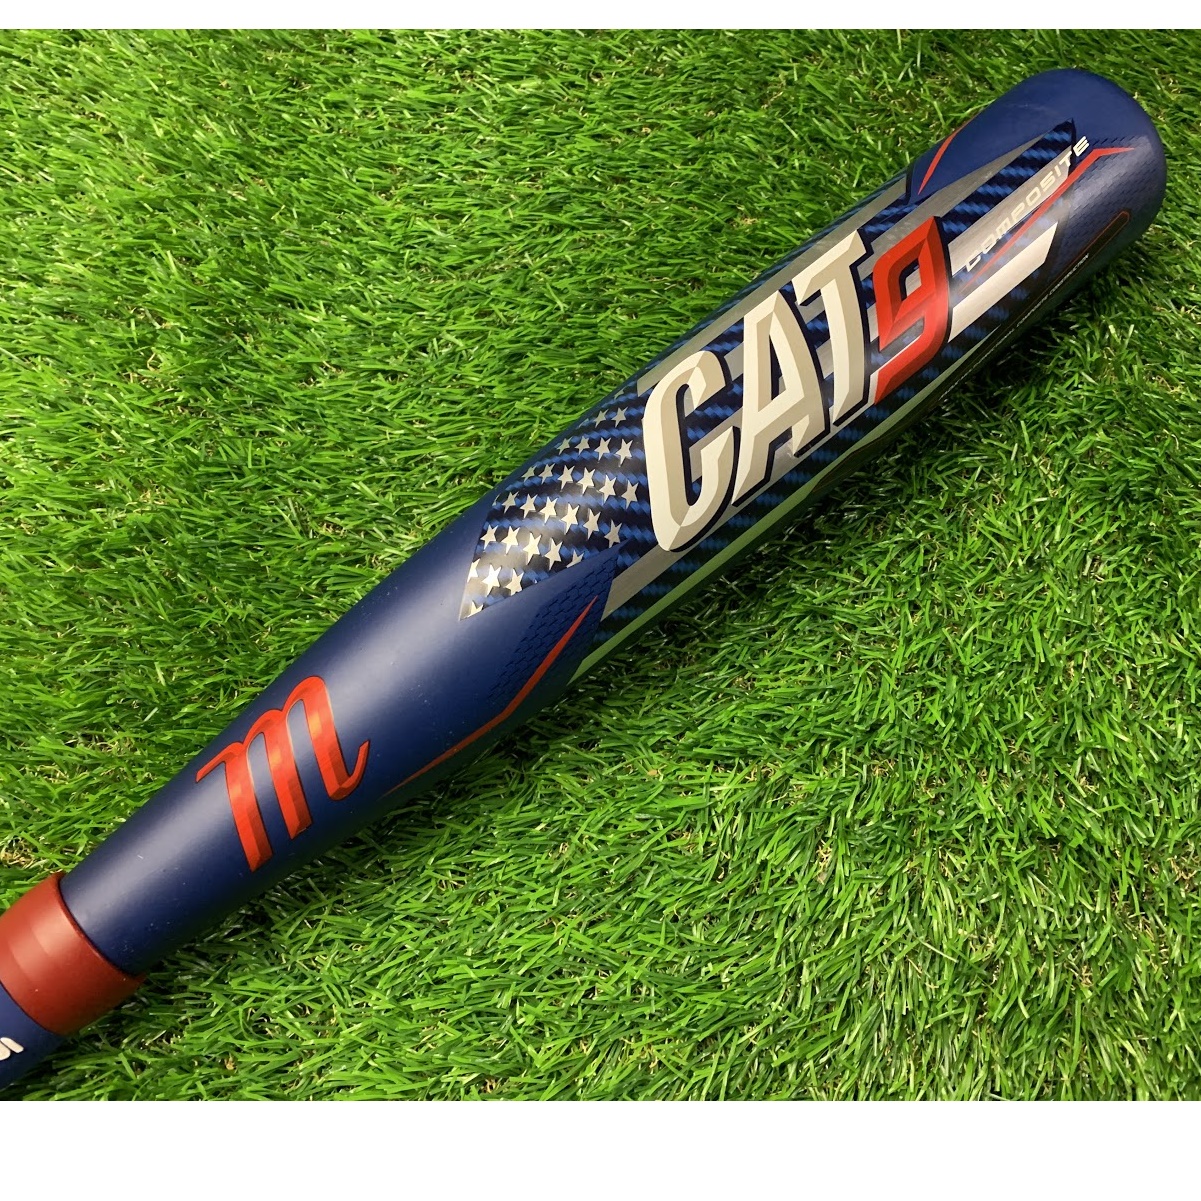 marucci-cat-composite-baseball-bat-29-inch-19-oz-demo MSBCCP10-2919-DEMO Marucci  Demo bats are a great opportunity to pick up a high